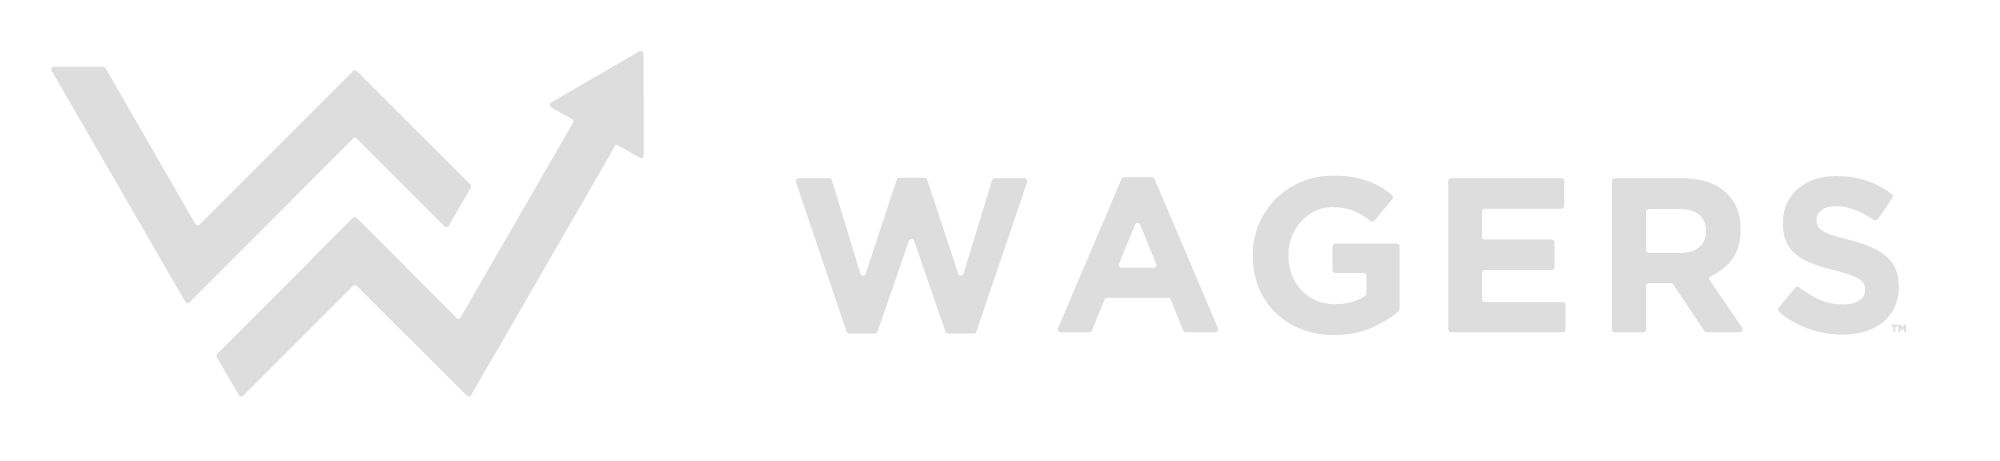 WAGERS-logo-horiz-allwhite